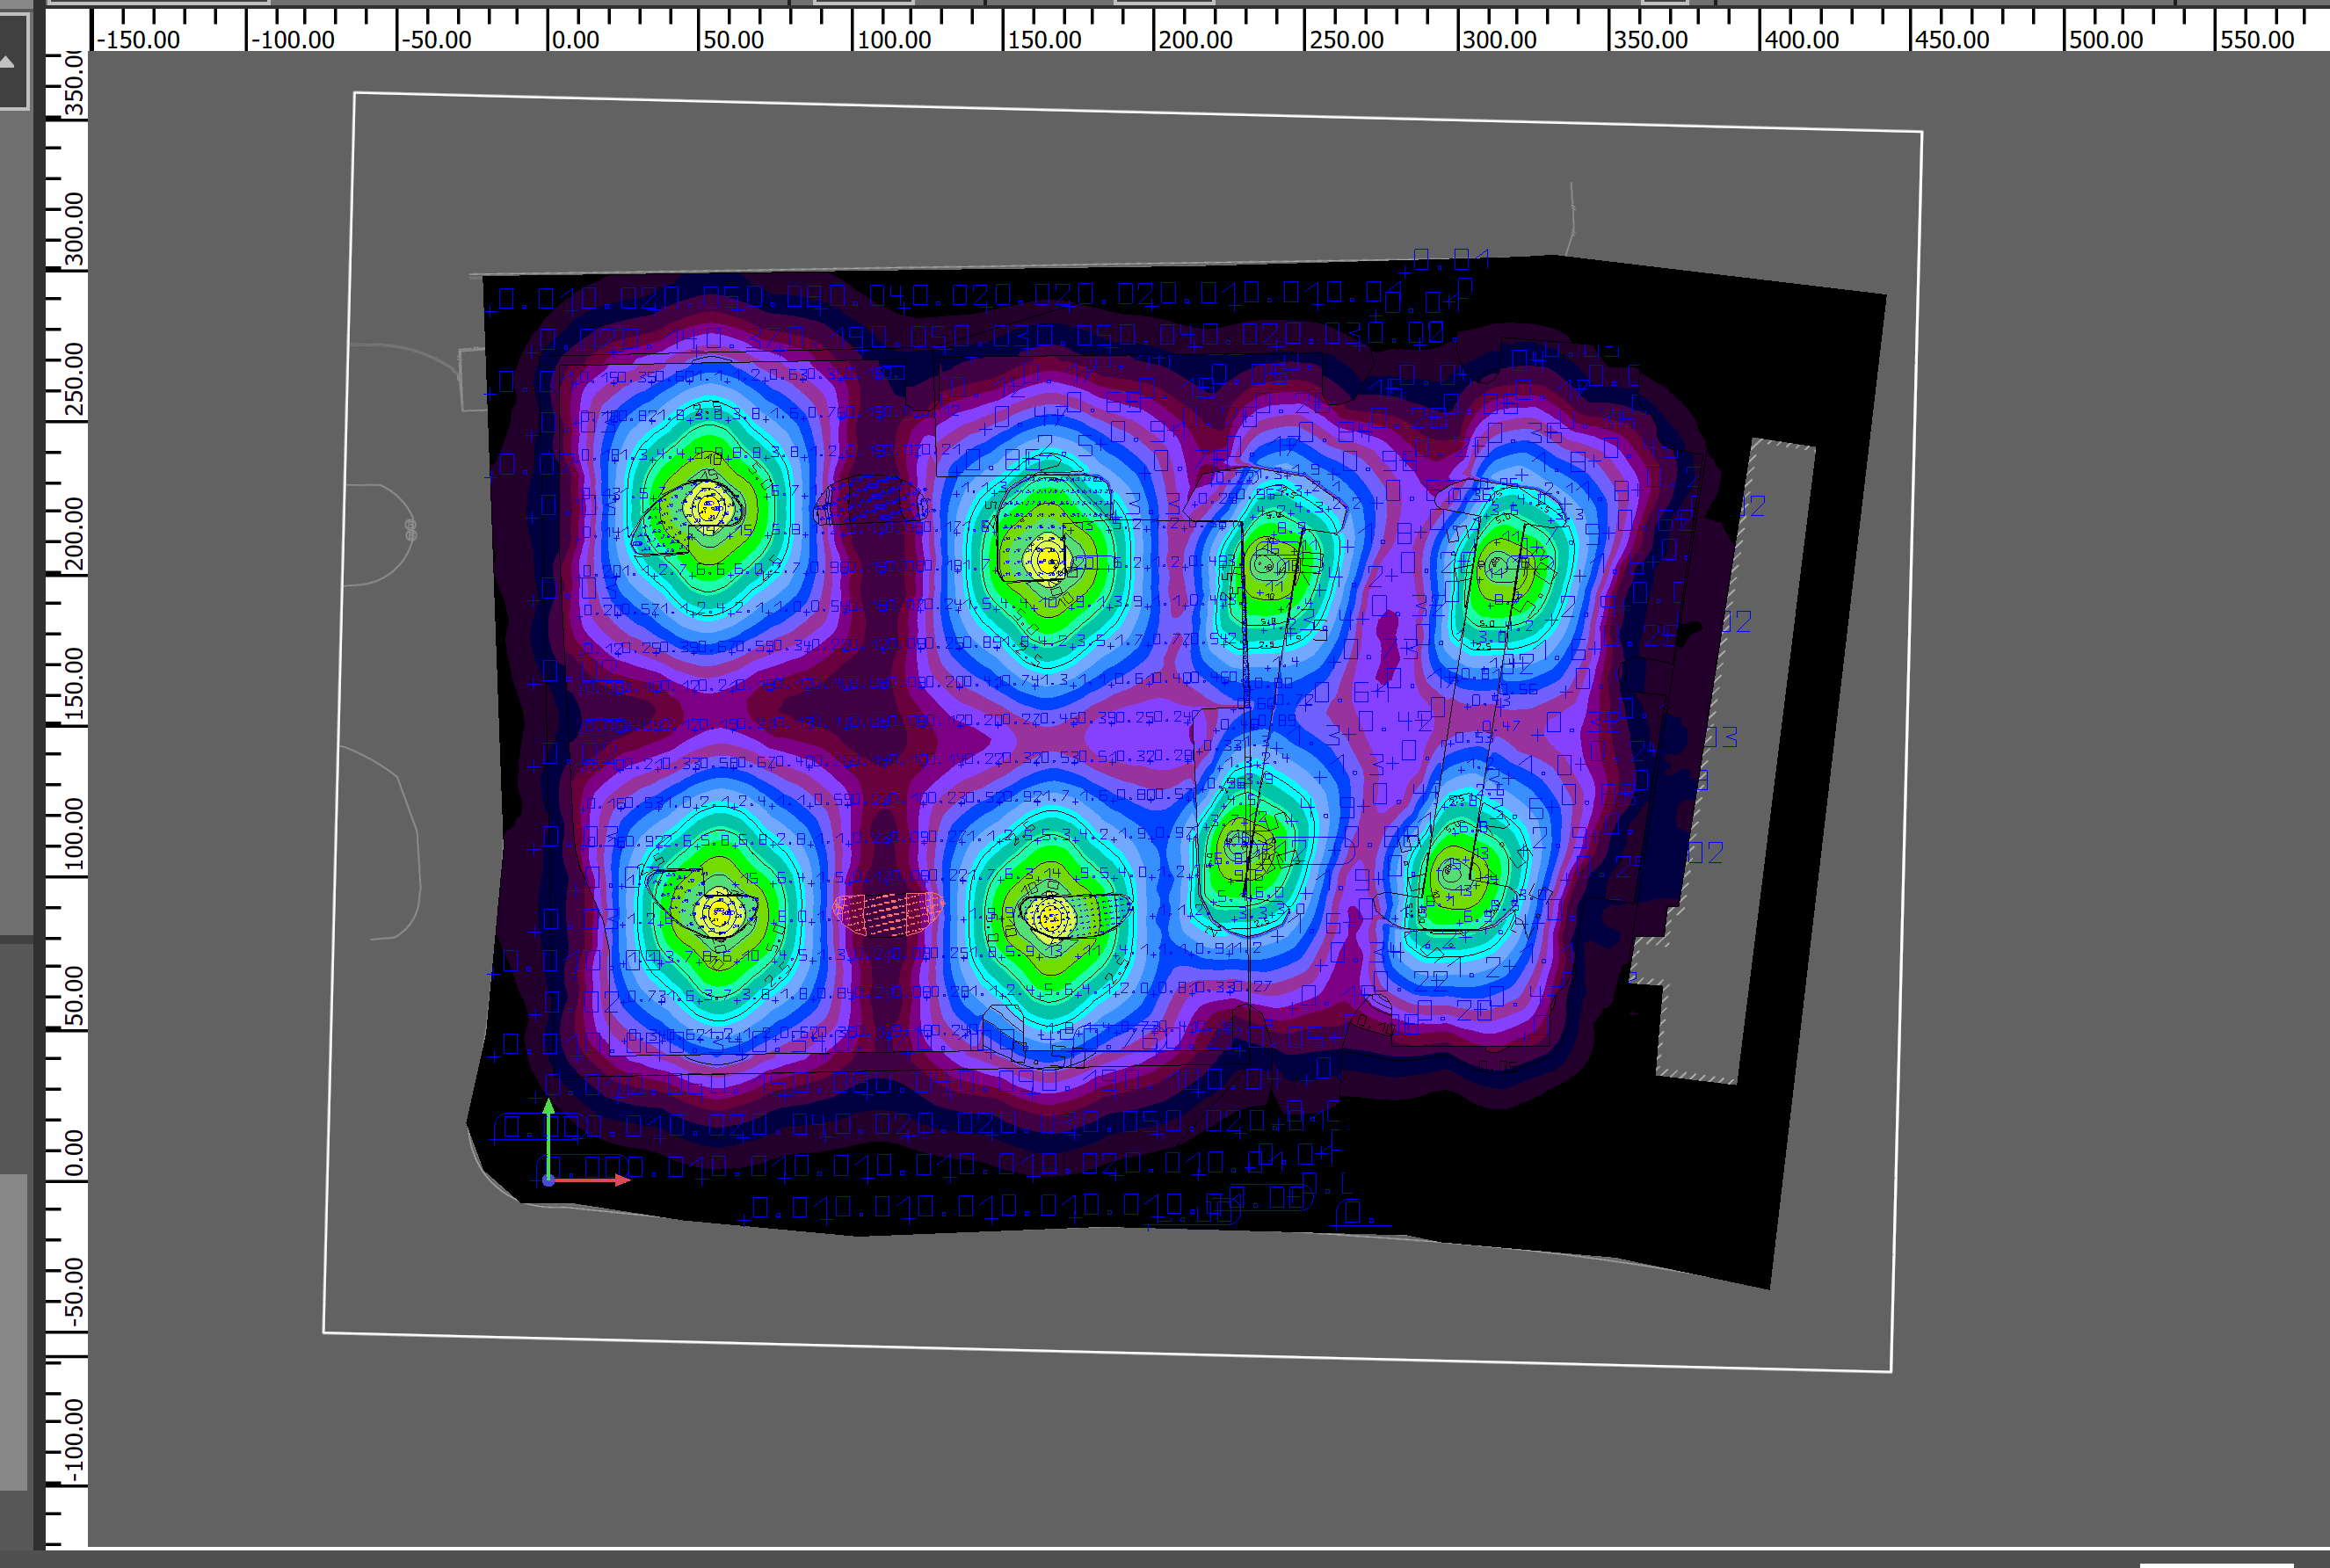 Lighting simulation displaying false colors